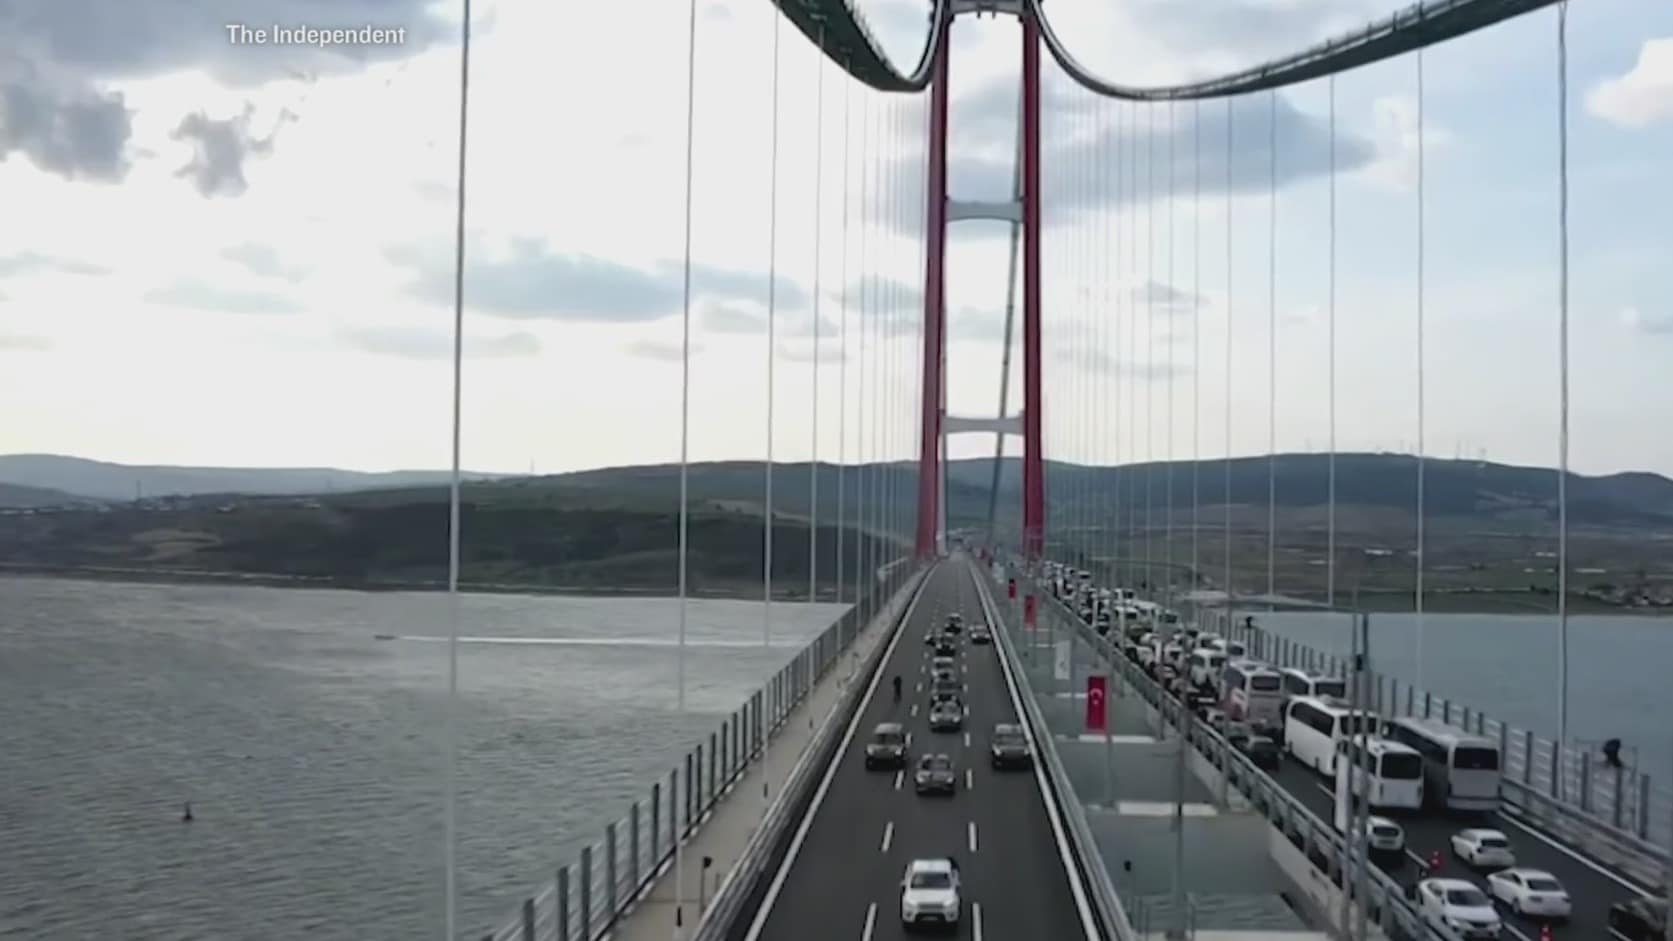 turquia inaugura el puente colgante mas largo del mundo